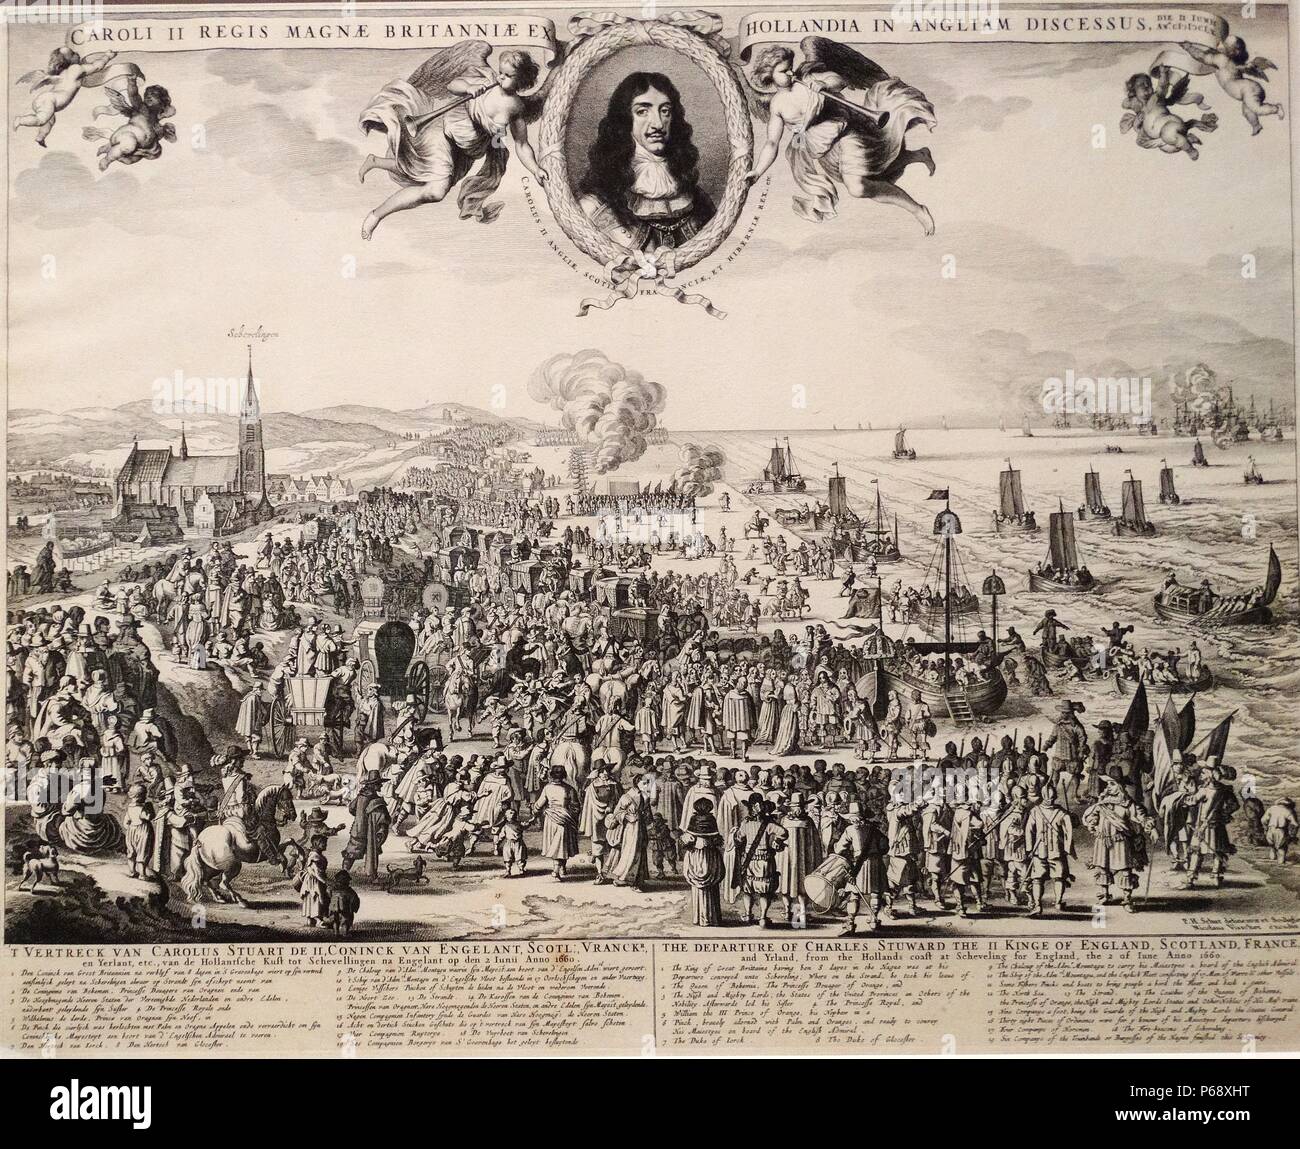 Incisione di partenza di Carlo II da Scheveningen. Da Adriaen Pietersz van de Venne (1589-1662). Risalenti al XVII secolo Foto Stock